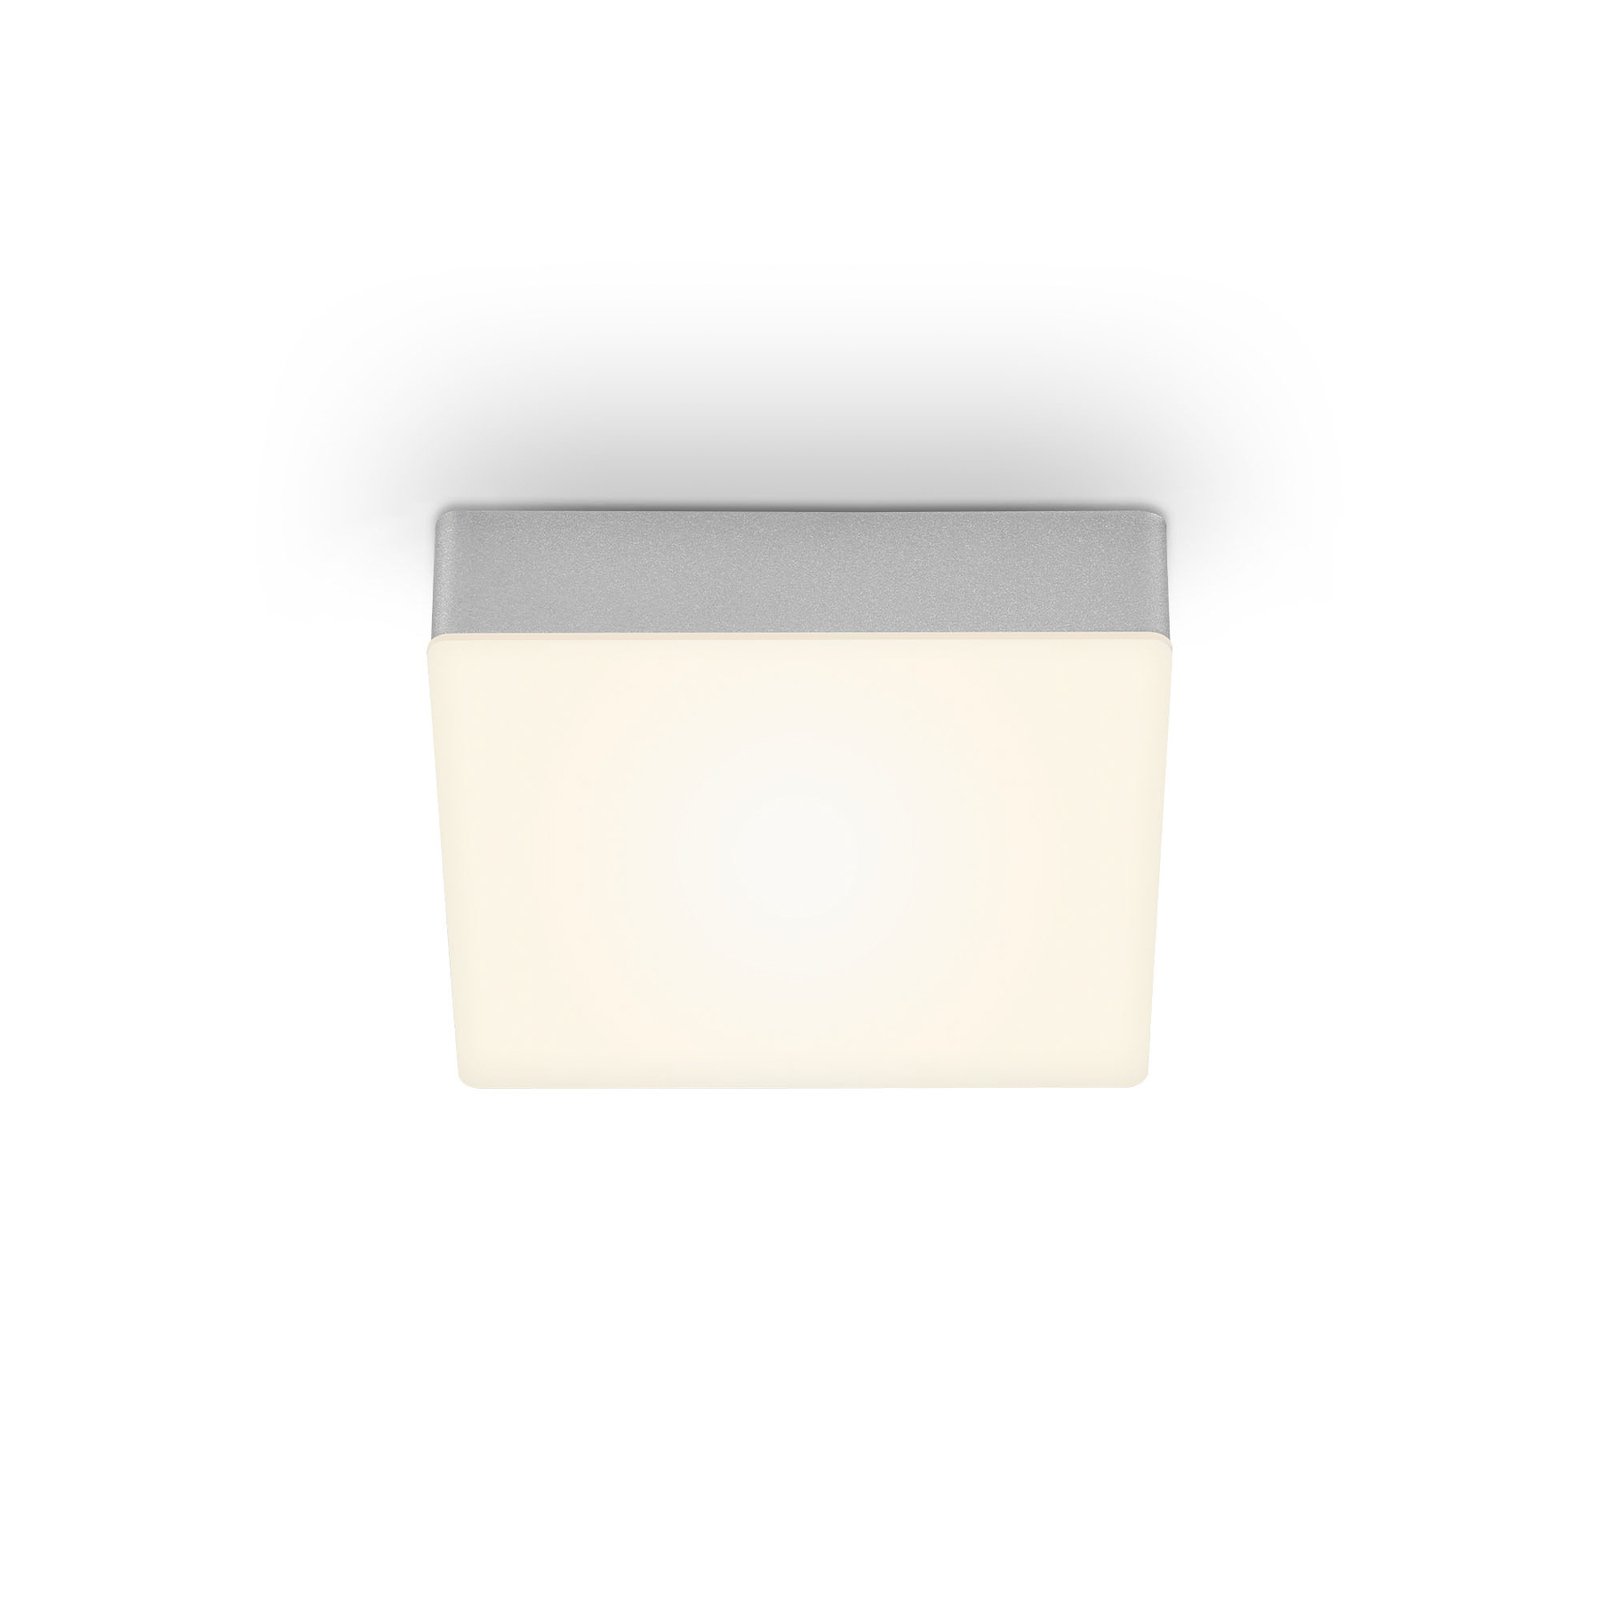 Stropné svietidlo Flame LED, 15,7 x 15,7 cm, strieborná